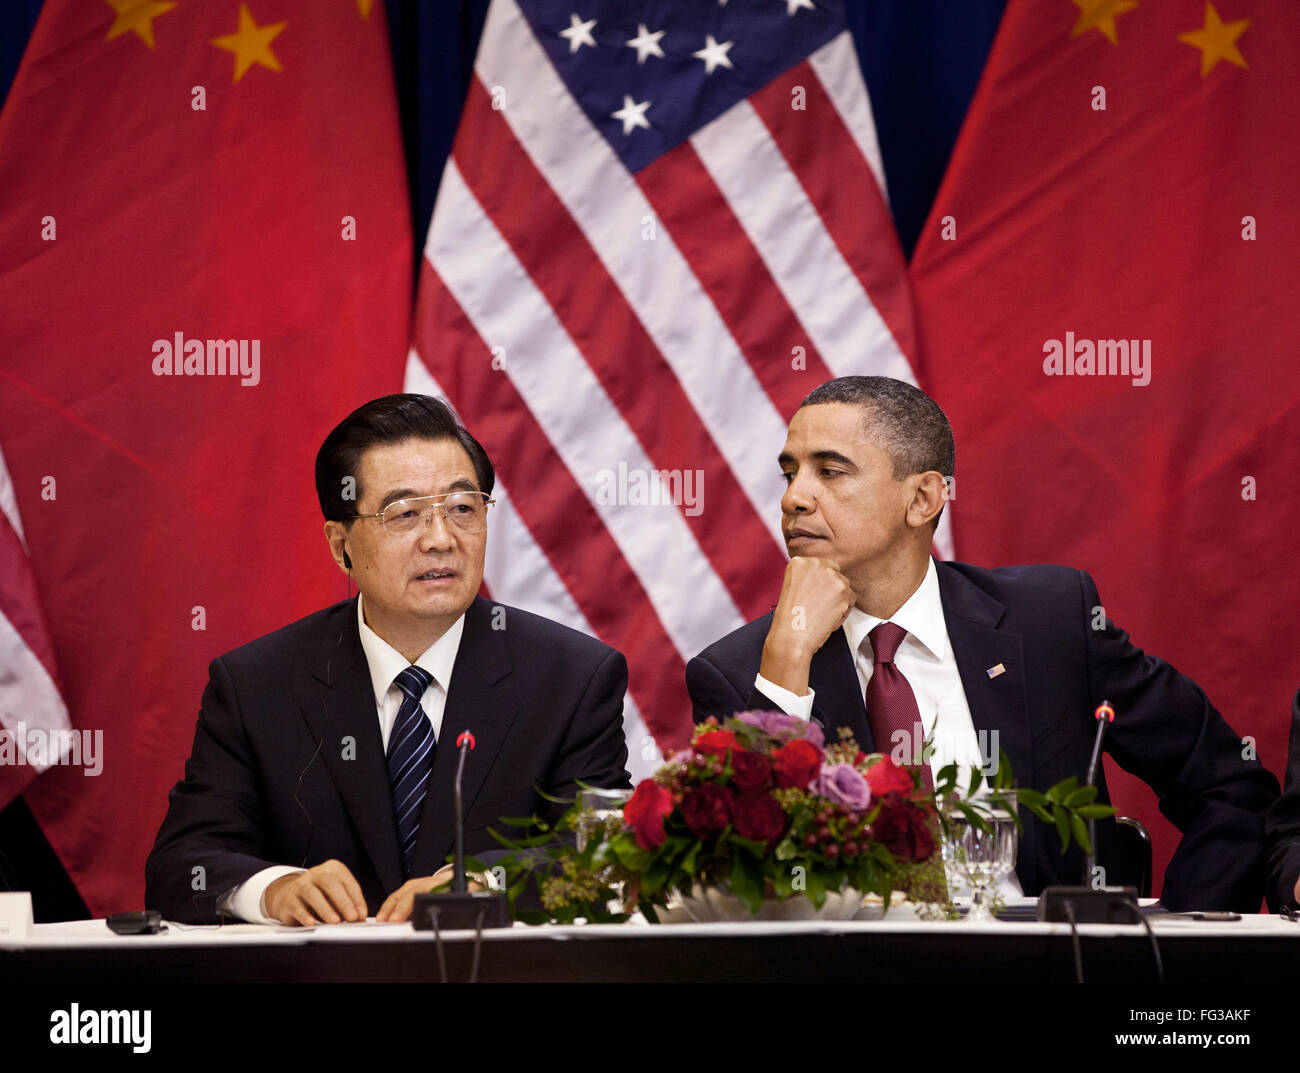 HU AND OBAMA, 2011. /nPresident Hu Jintao of China and President Barack Obama at a meeting in Washington, D.C. Photograph, 19 January 2011. Stock Photo